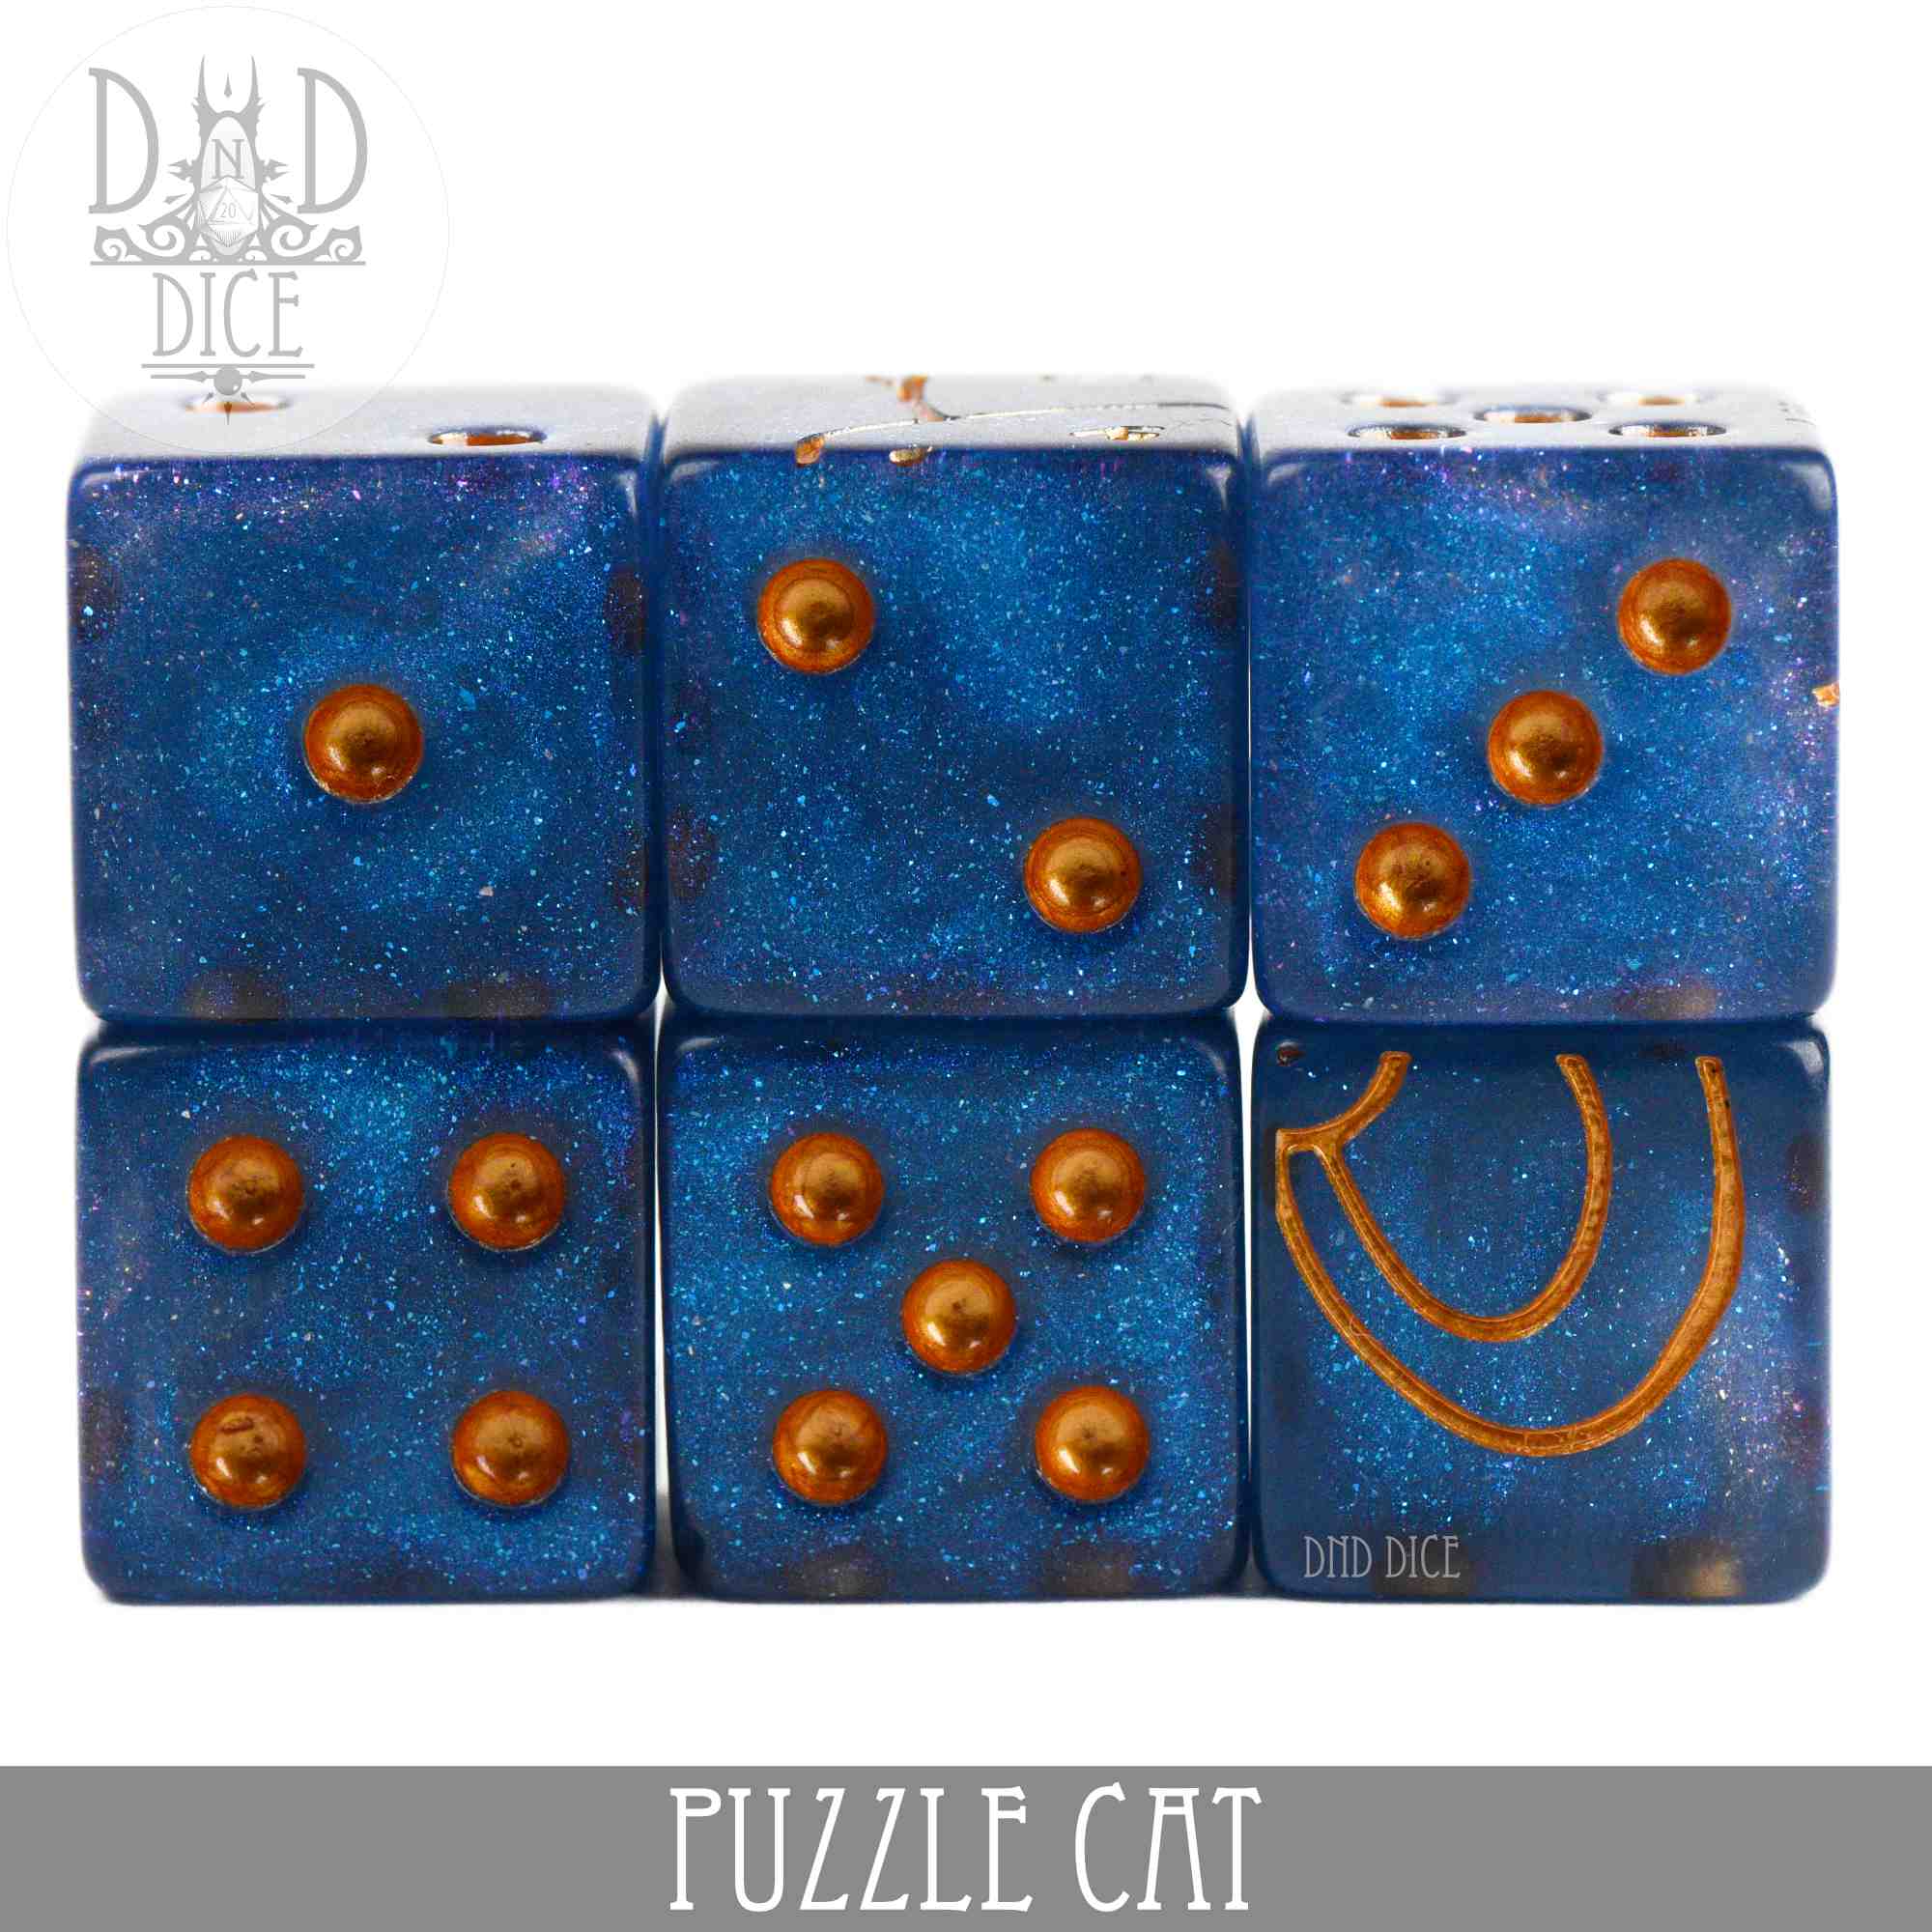 Puzzle Cat 6D6 Dice Set